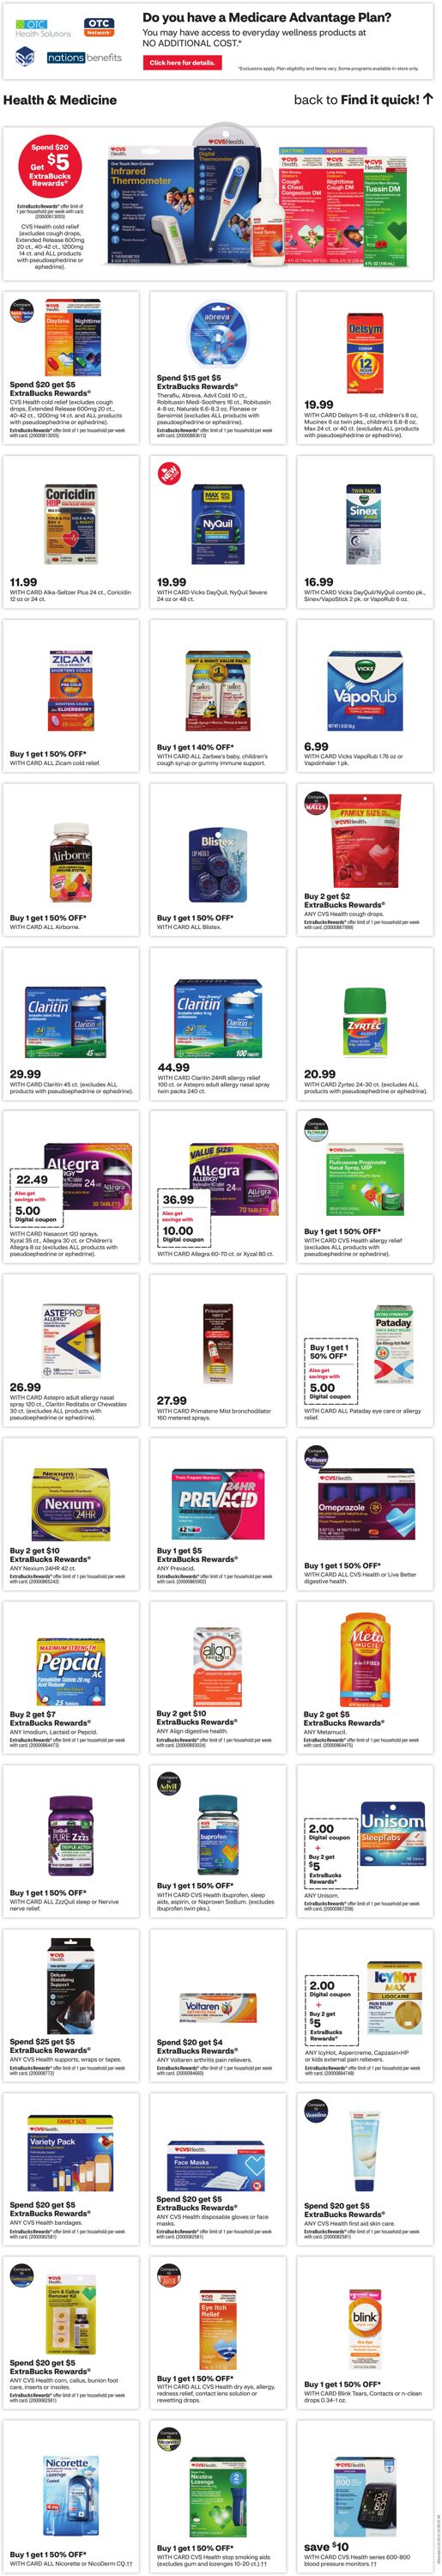 Weekly ad CVS Pharmacy 02/25/2024 - 03/02/2024